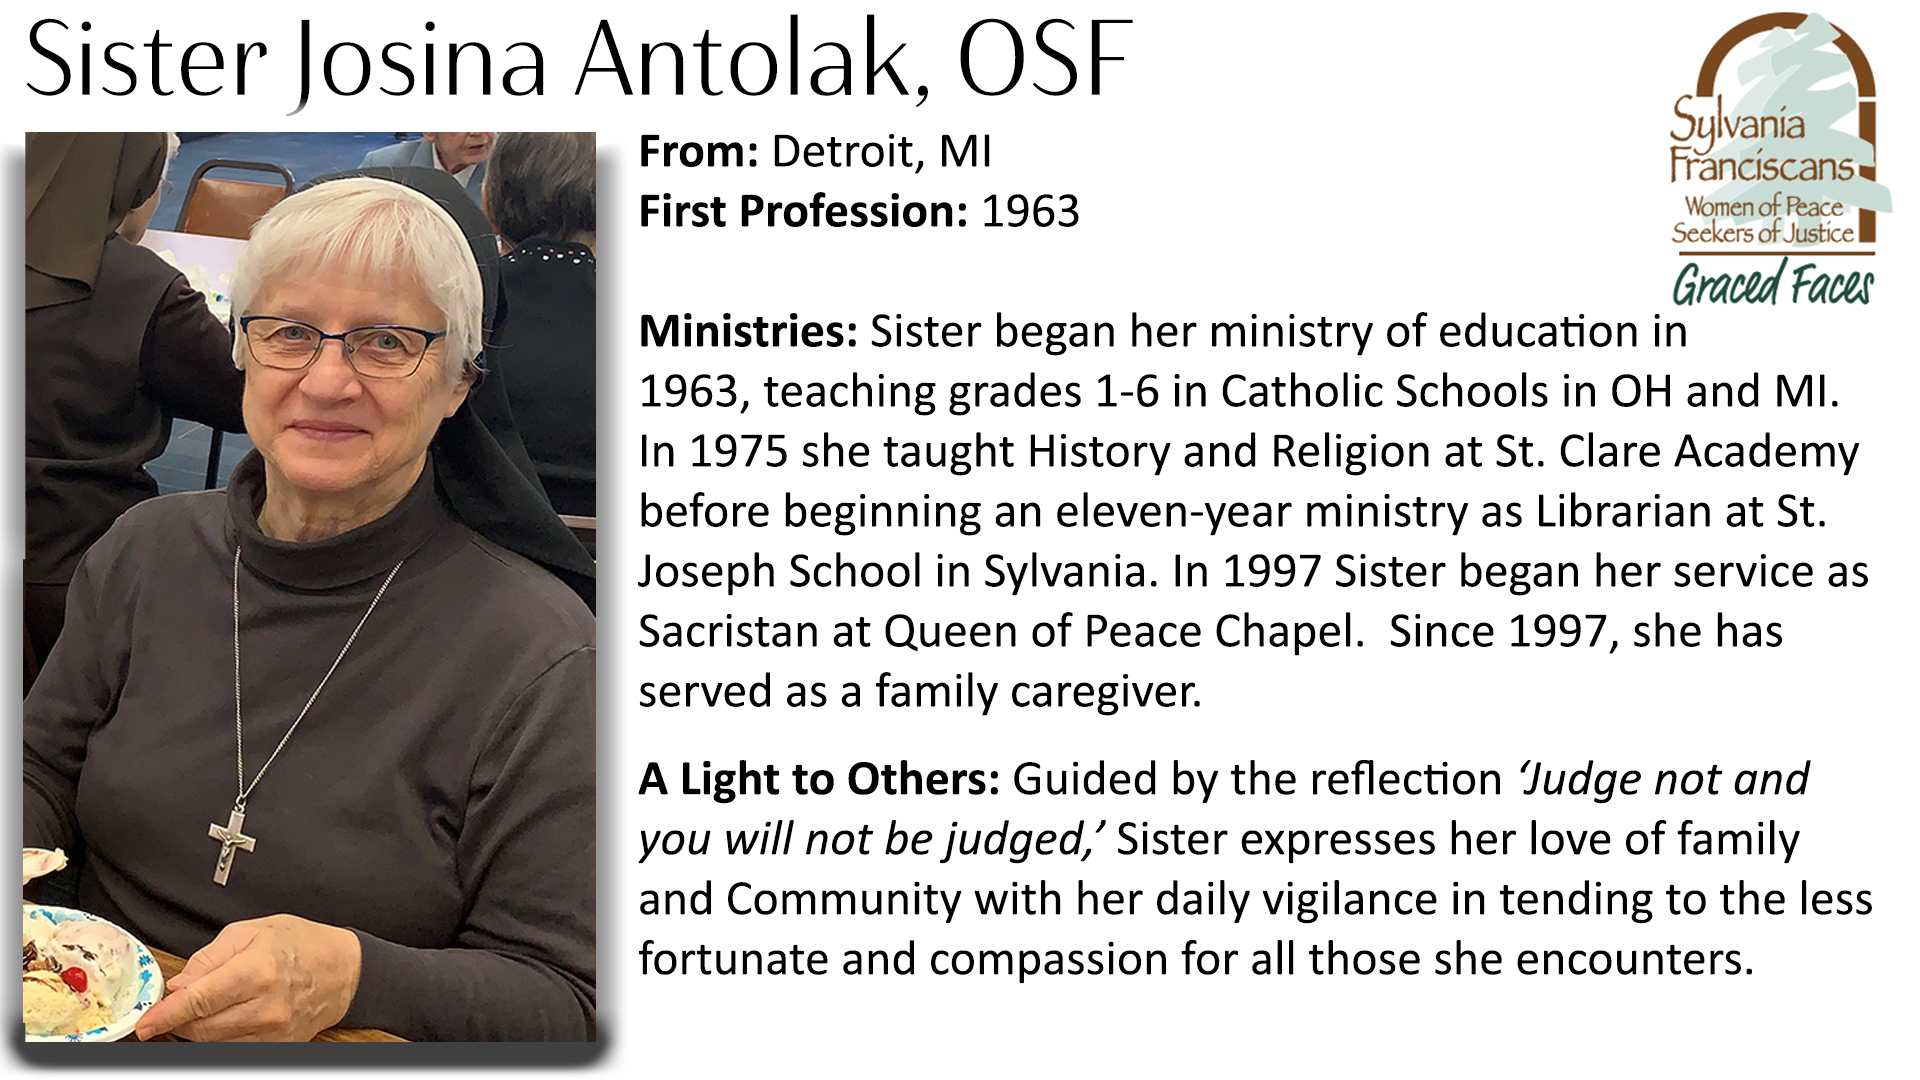 SIster Josina Antolak, OSF